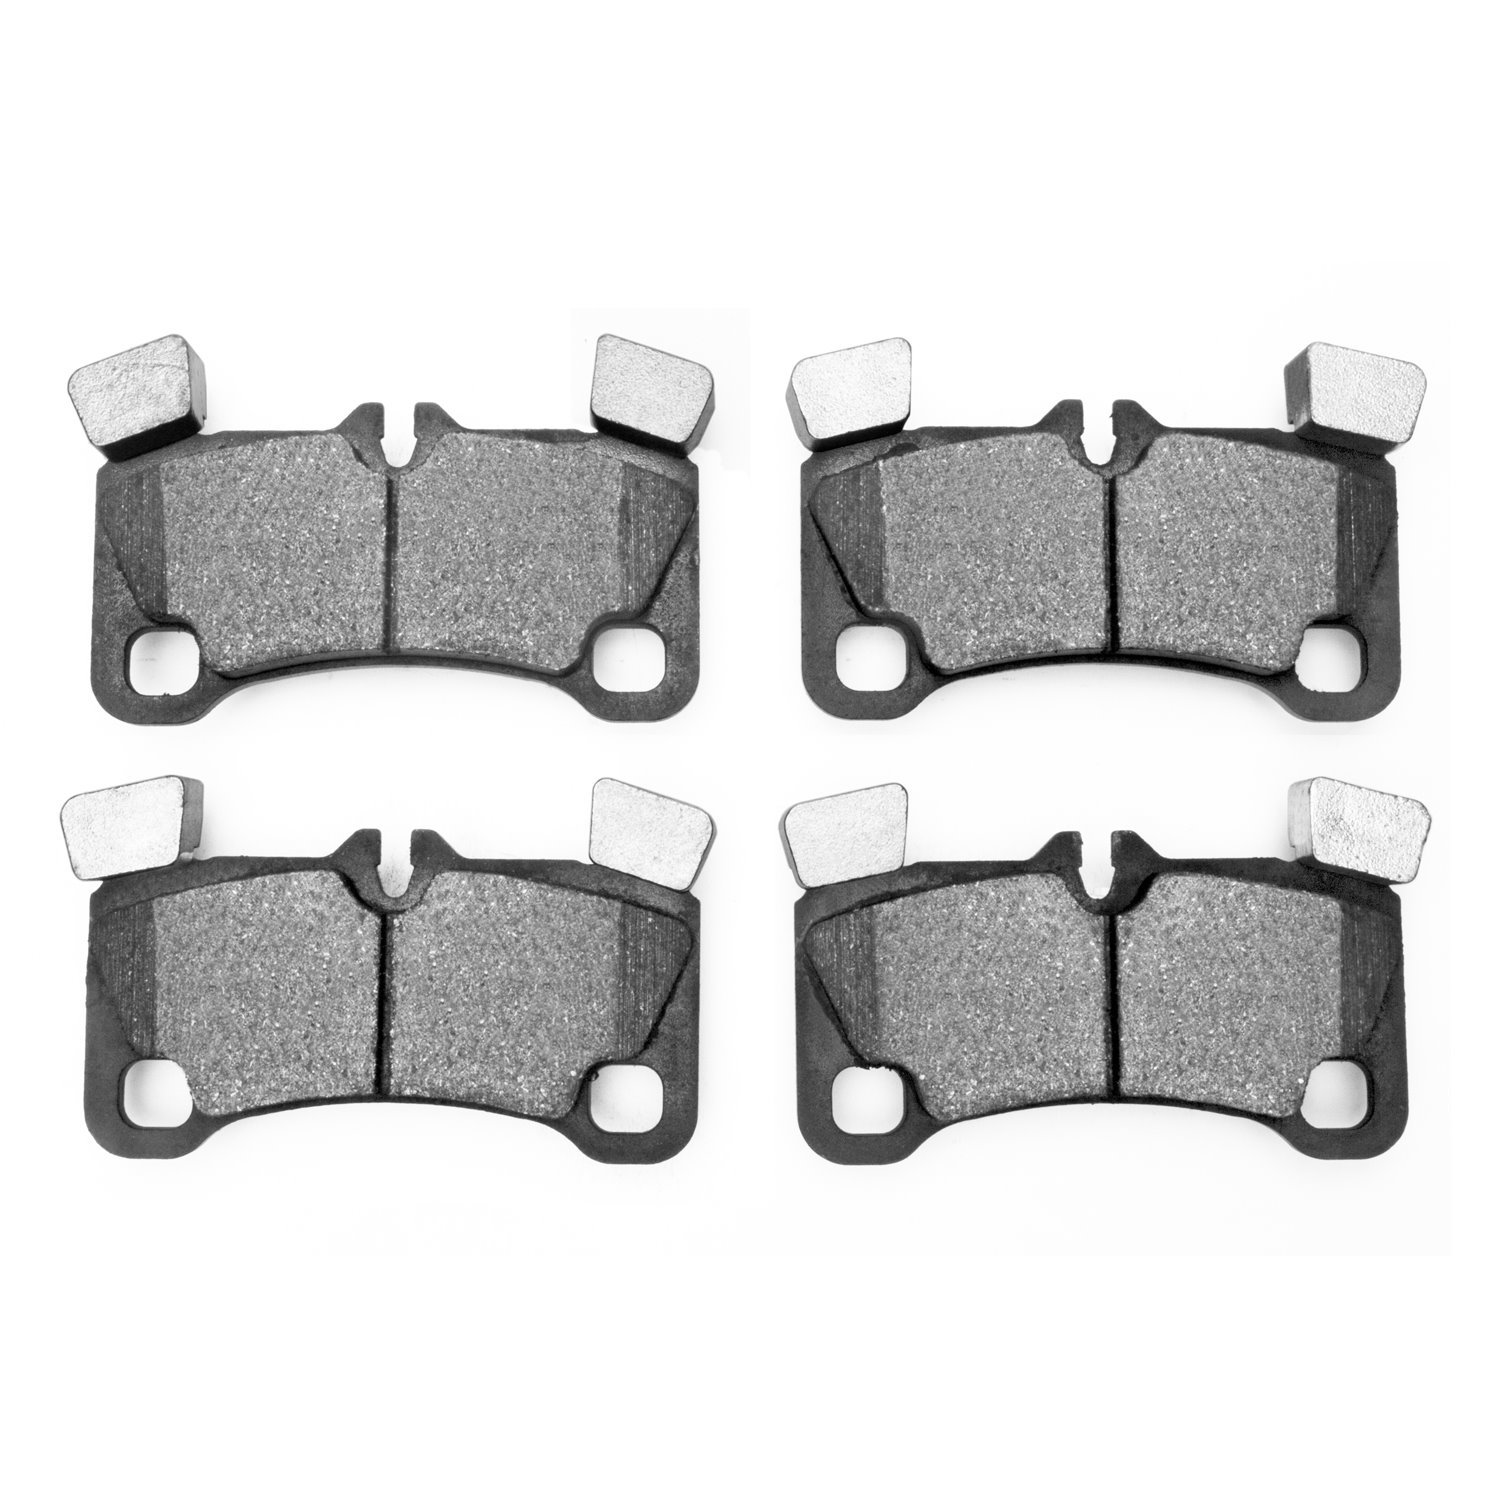 1310-1350-00 3000-Series Ceramic Brake Pads, 2008-2010 Multiple Makes/Models, Position: Rear